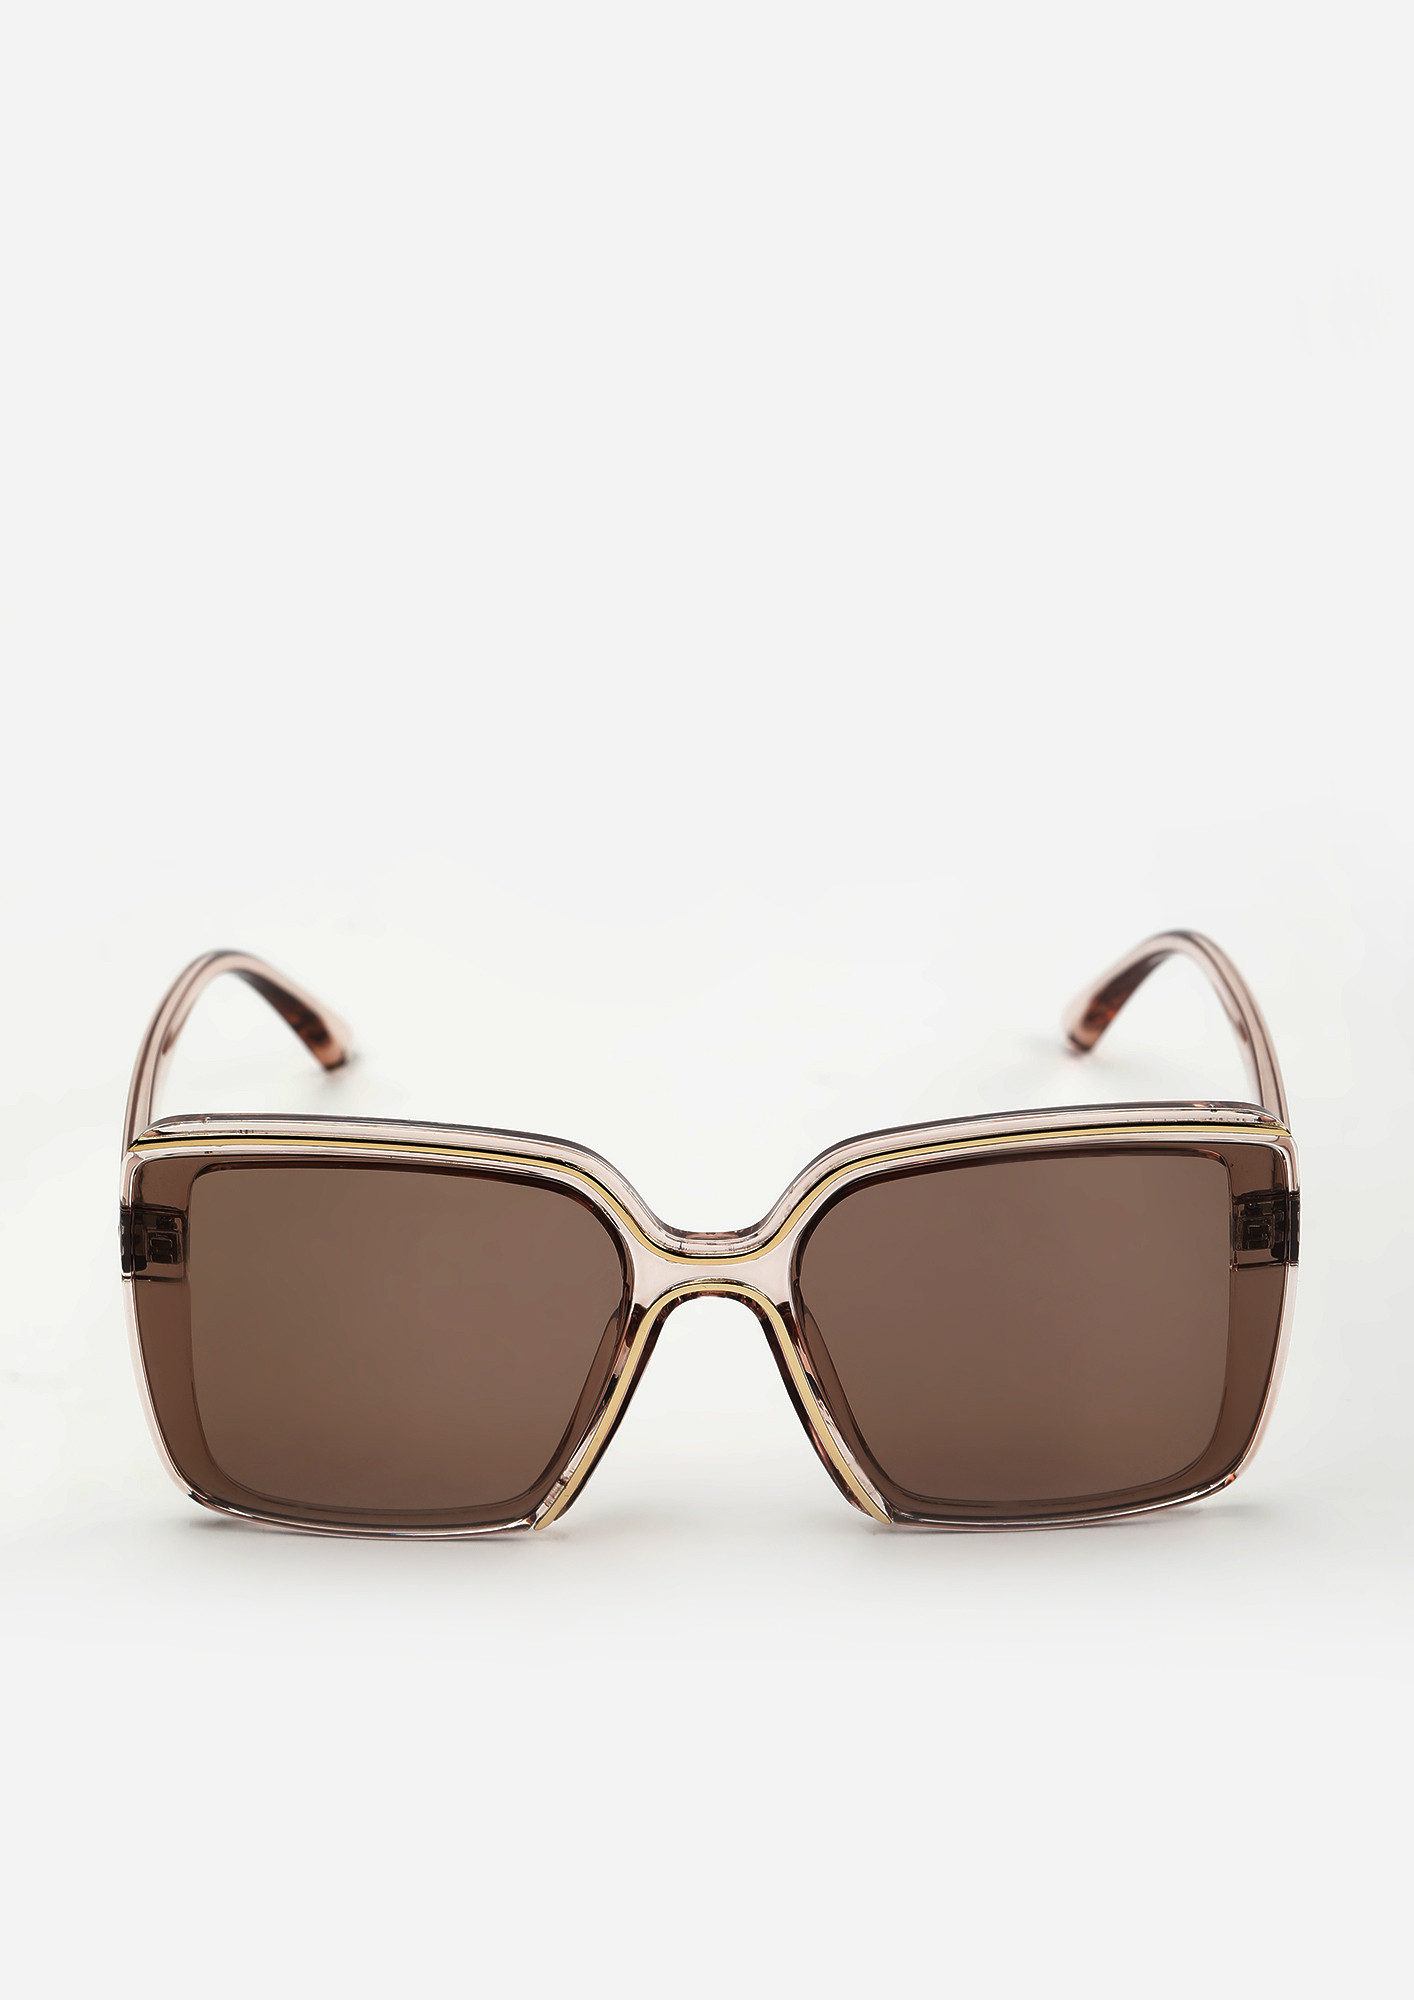 The Summer Shield Light Brown Retro Sunglasses